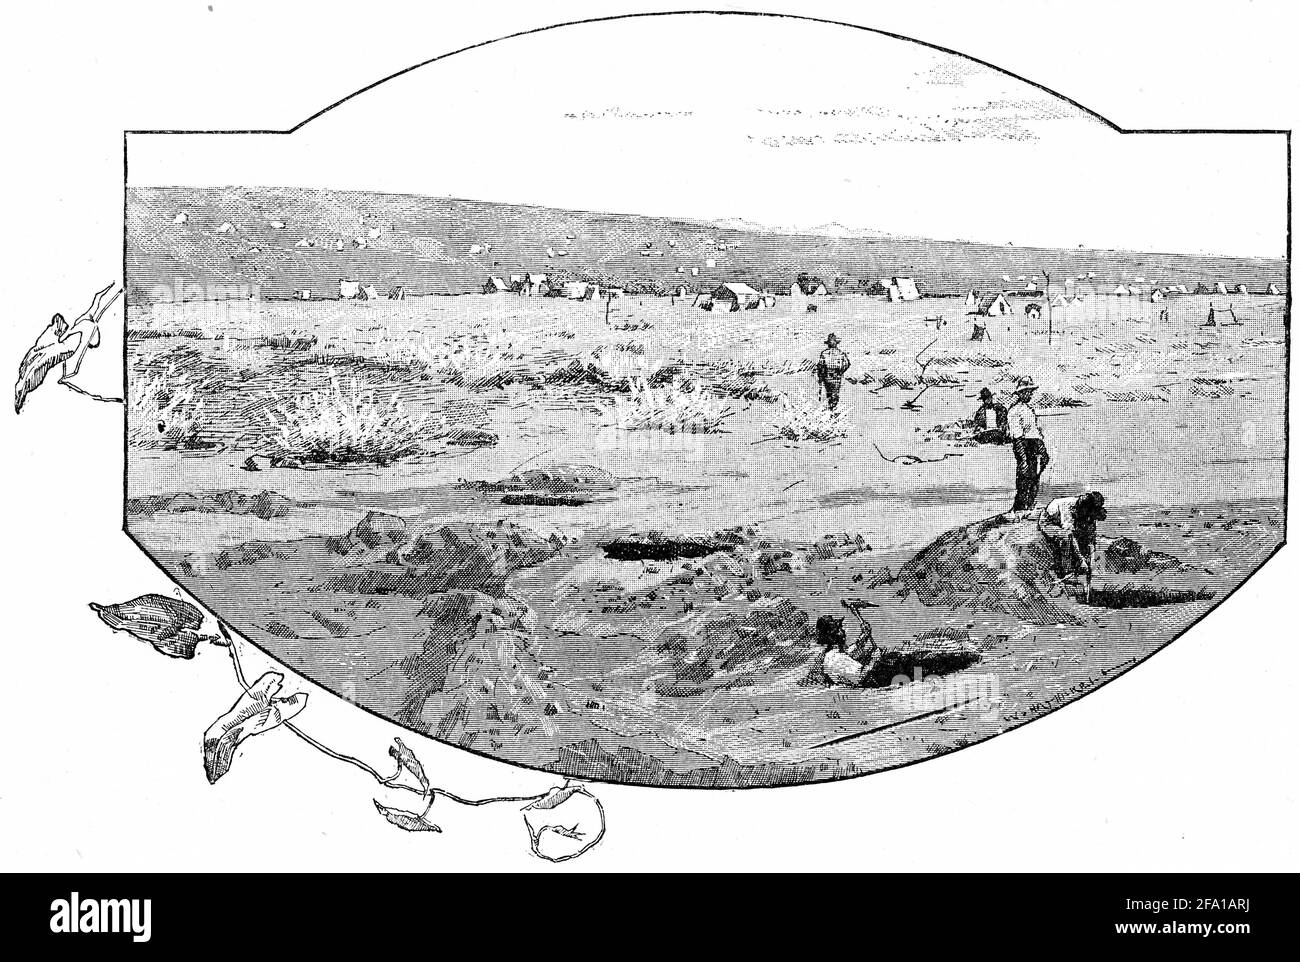 Engraving of men working the Teetulpa goldifelds in Australia during the gold rush days Stock Photo